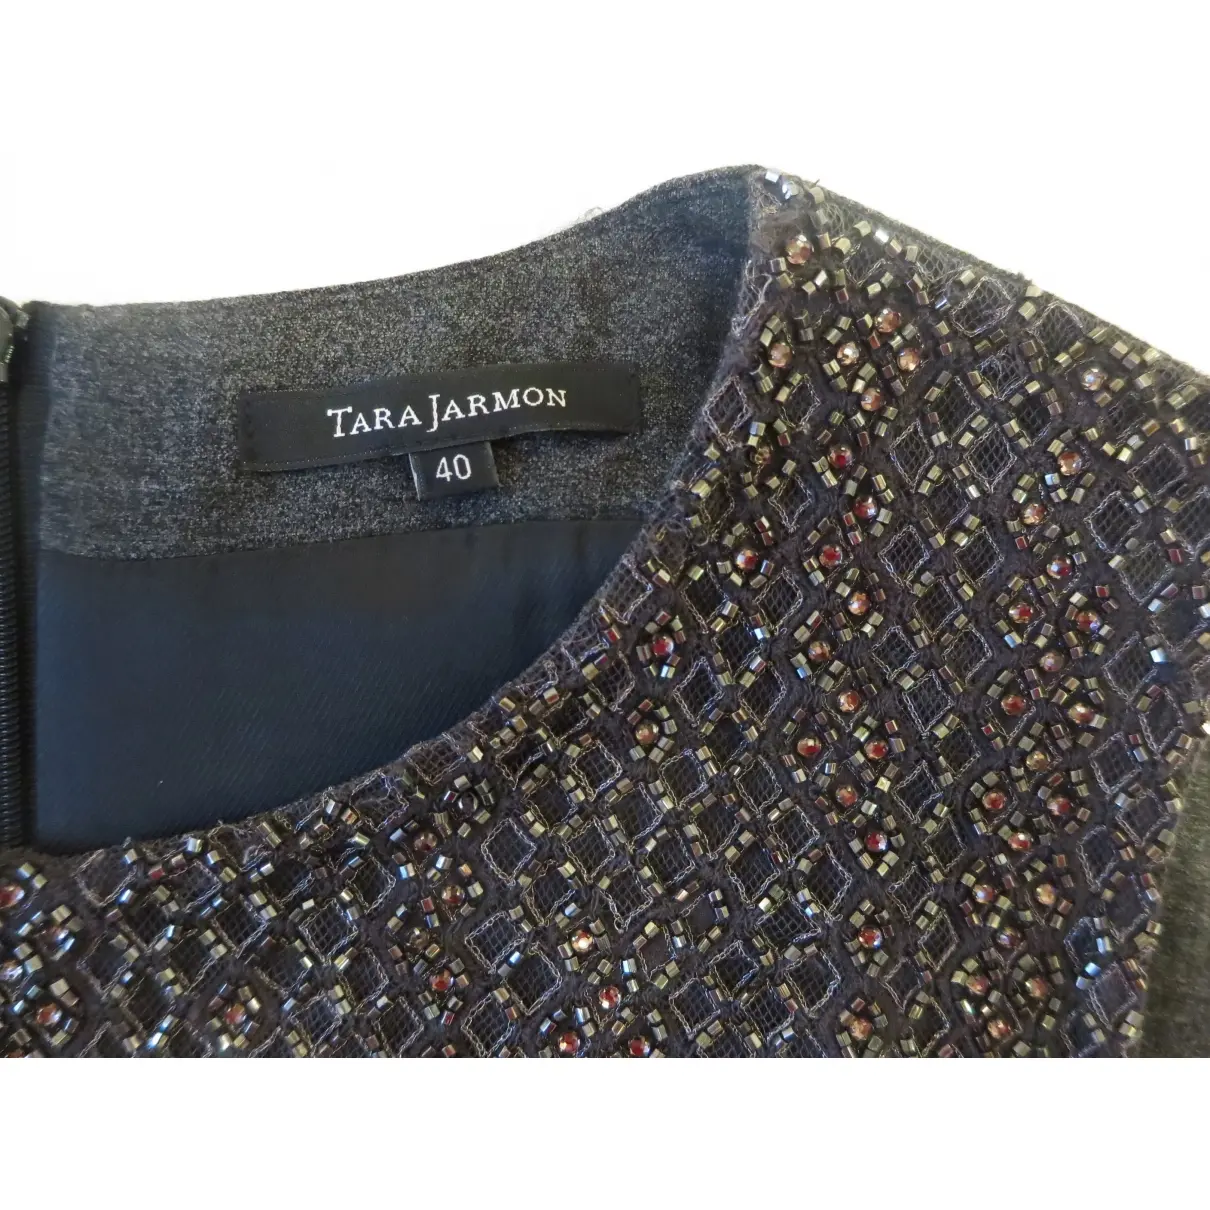 Tara Jarmon Wool mid-length dress for sale